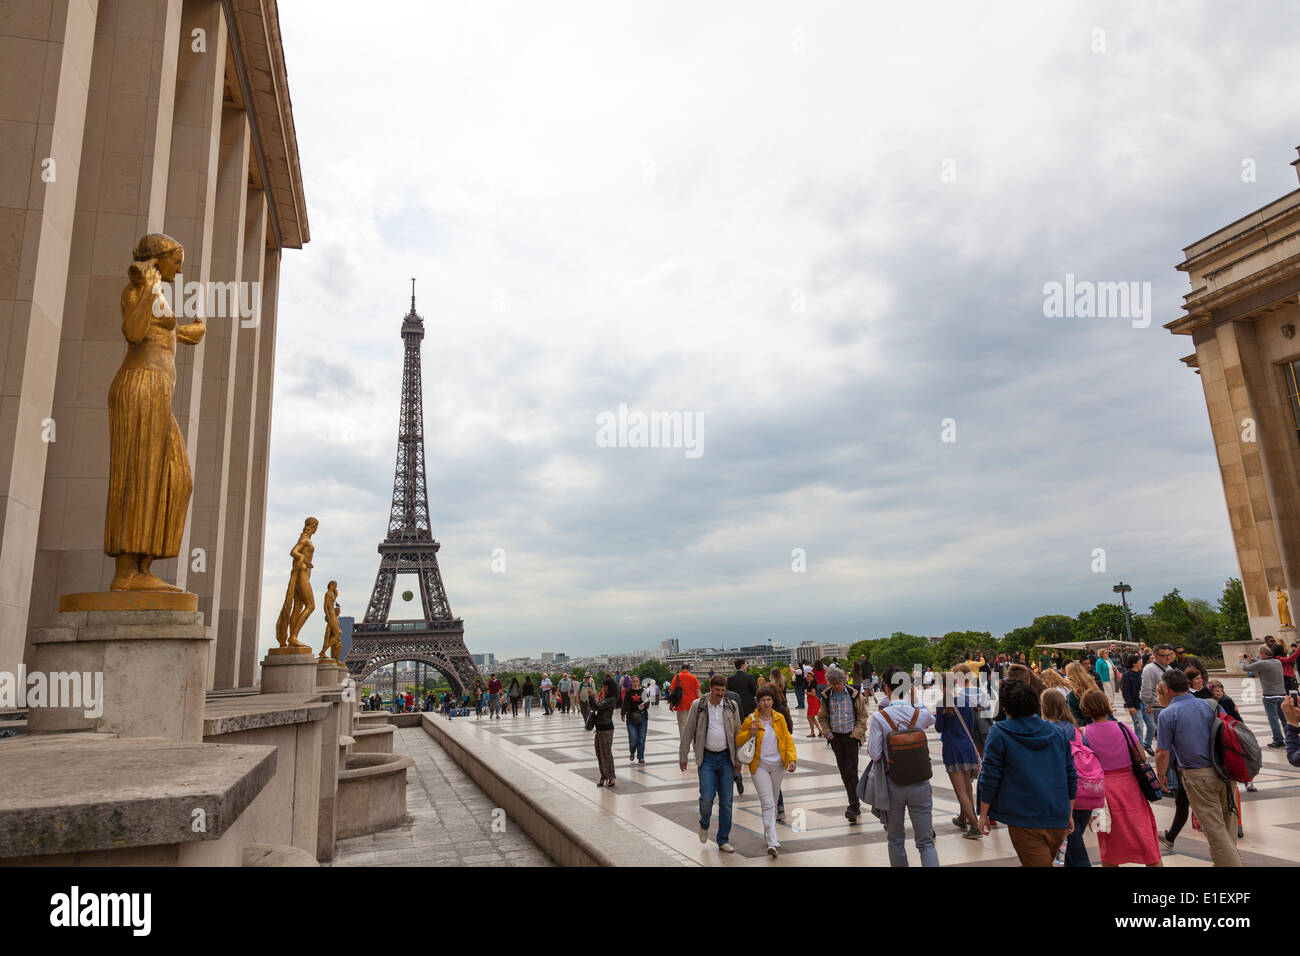 Eiffel Tower viewed from Palais de Chaillot, Place du Trocadero, Paris France Stock Photo